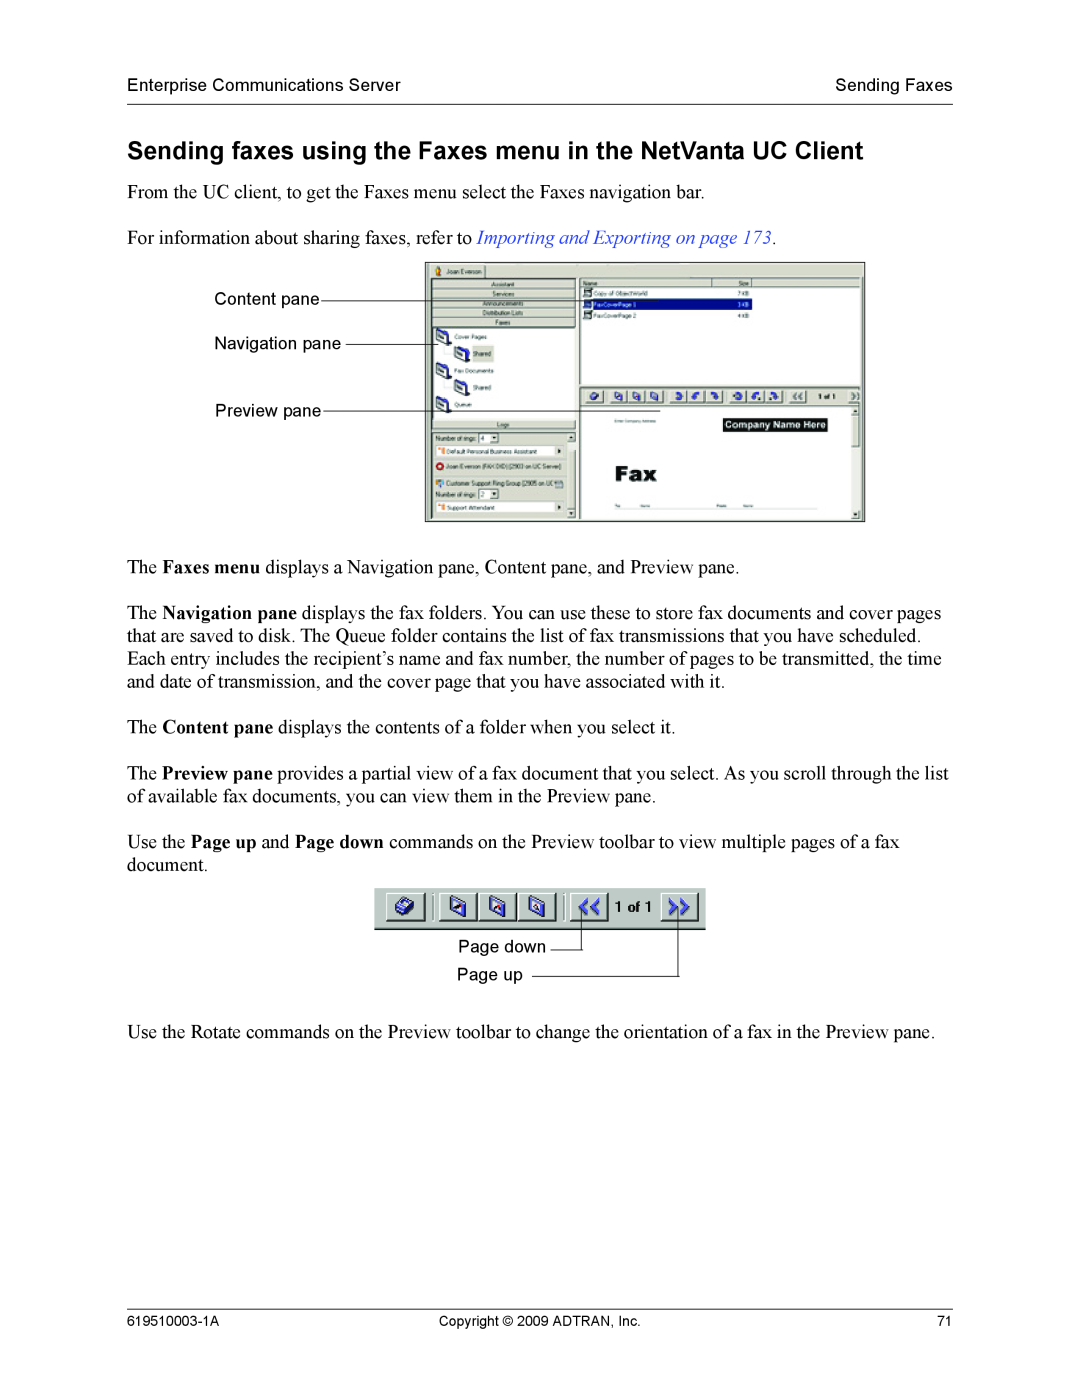 ADTRAN 619510003-1A manual Sending faxes using the Faxes menu in the NetVanta UC Client 